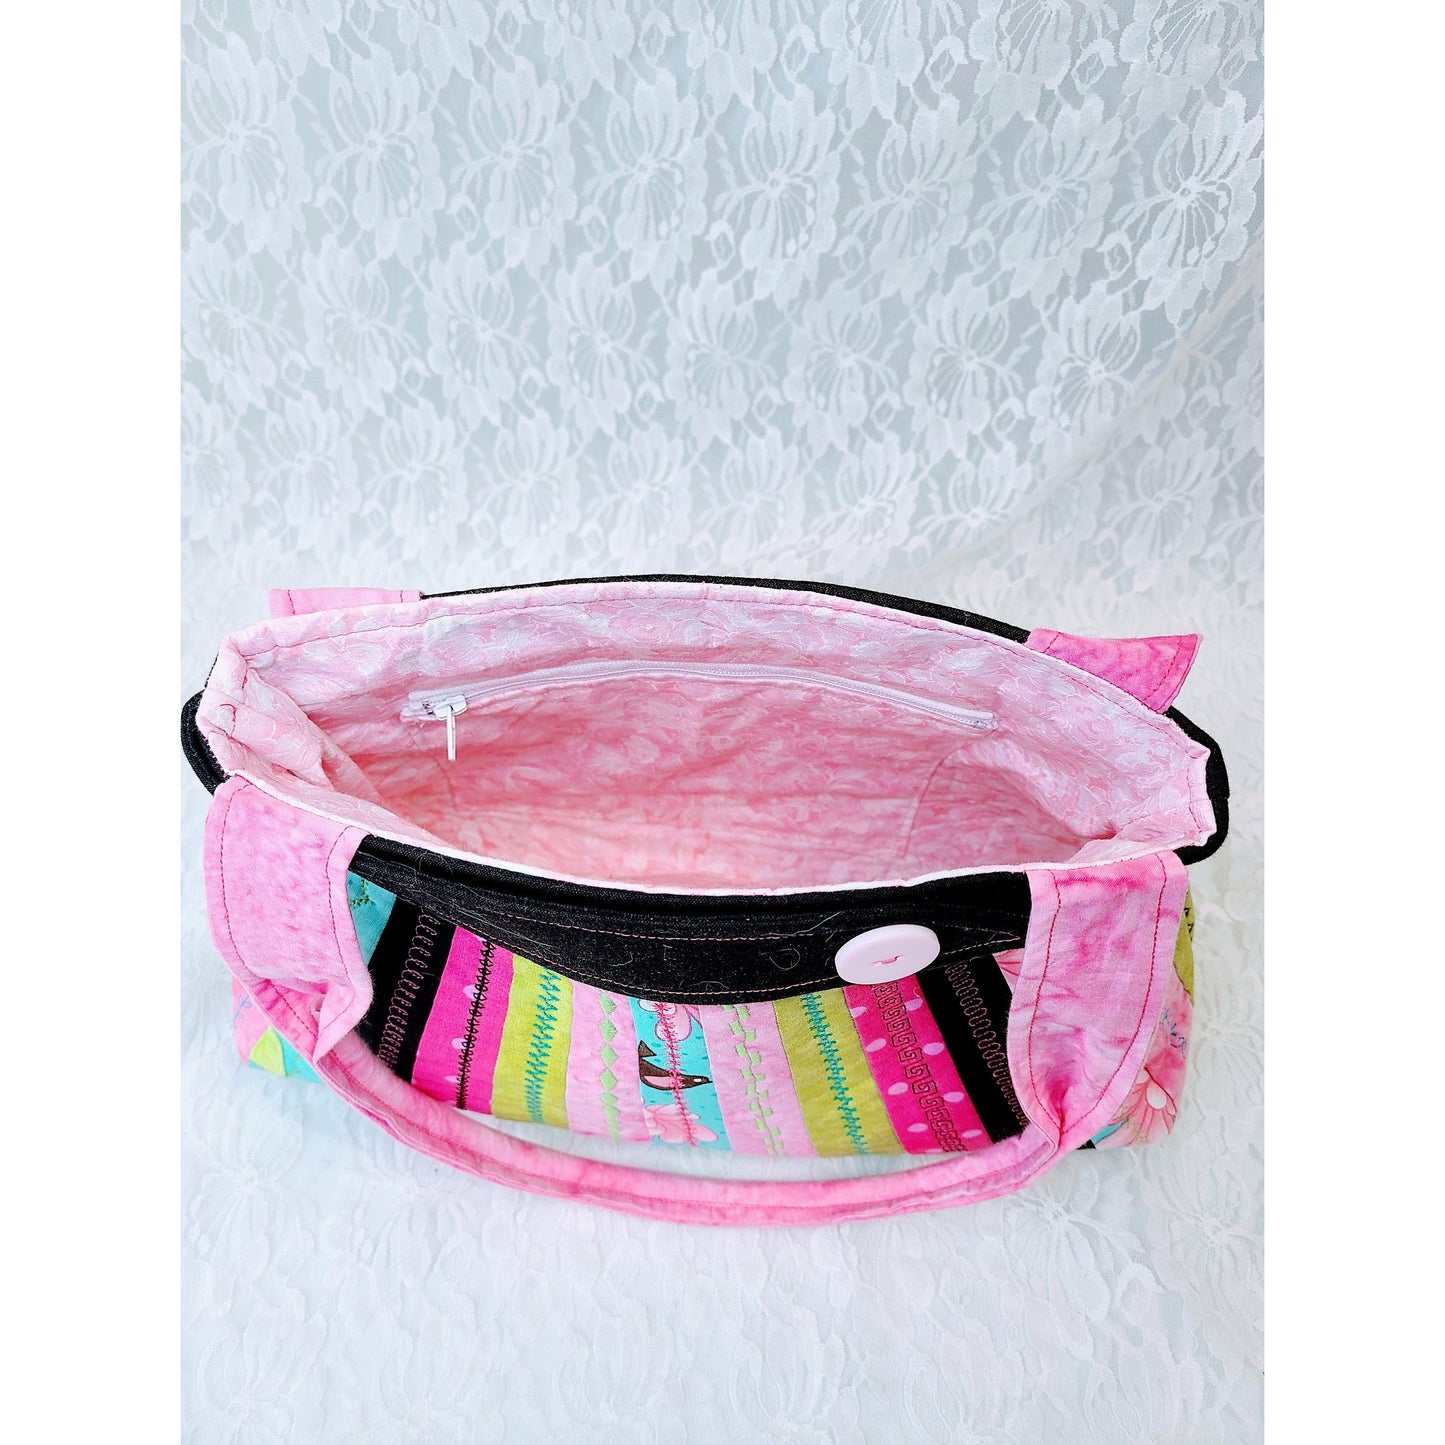 Handmade Purse ~ Vintage Style Handbag ~Floral w/ Bird Shoulder Bag ~ Perfect for Phone and Essentials ~ OOAK Satchel